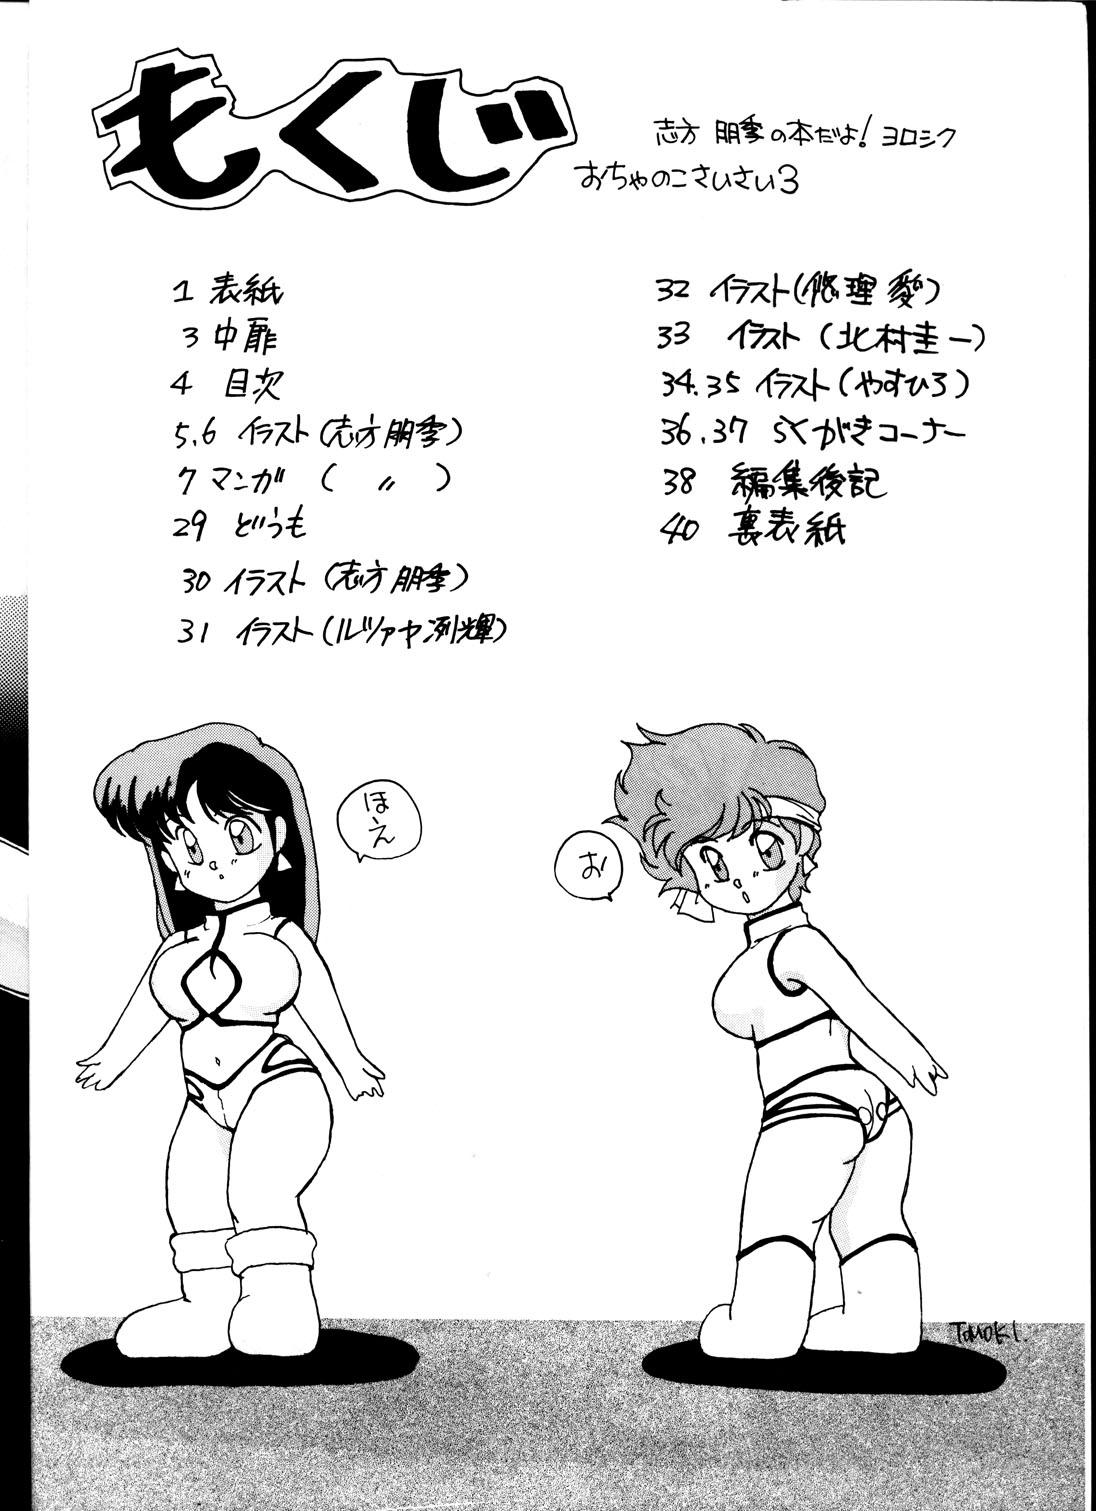 Dancing Ocha no Ko Saisai 3 - Dirty pair Massages - Page 4